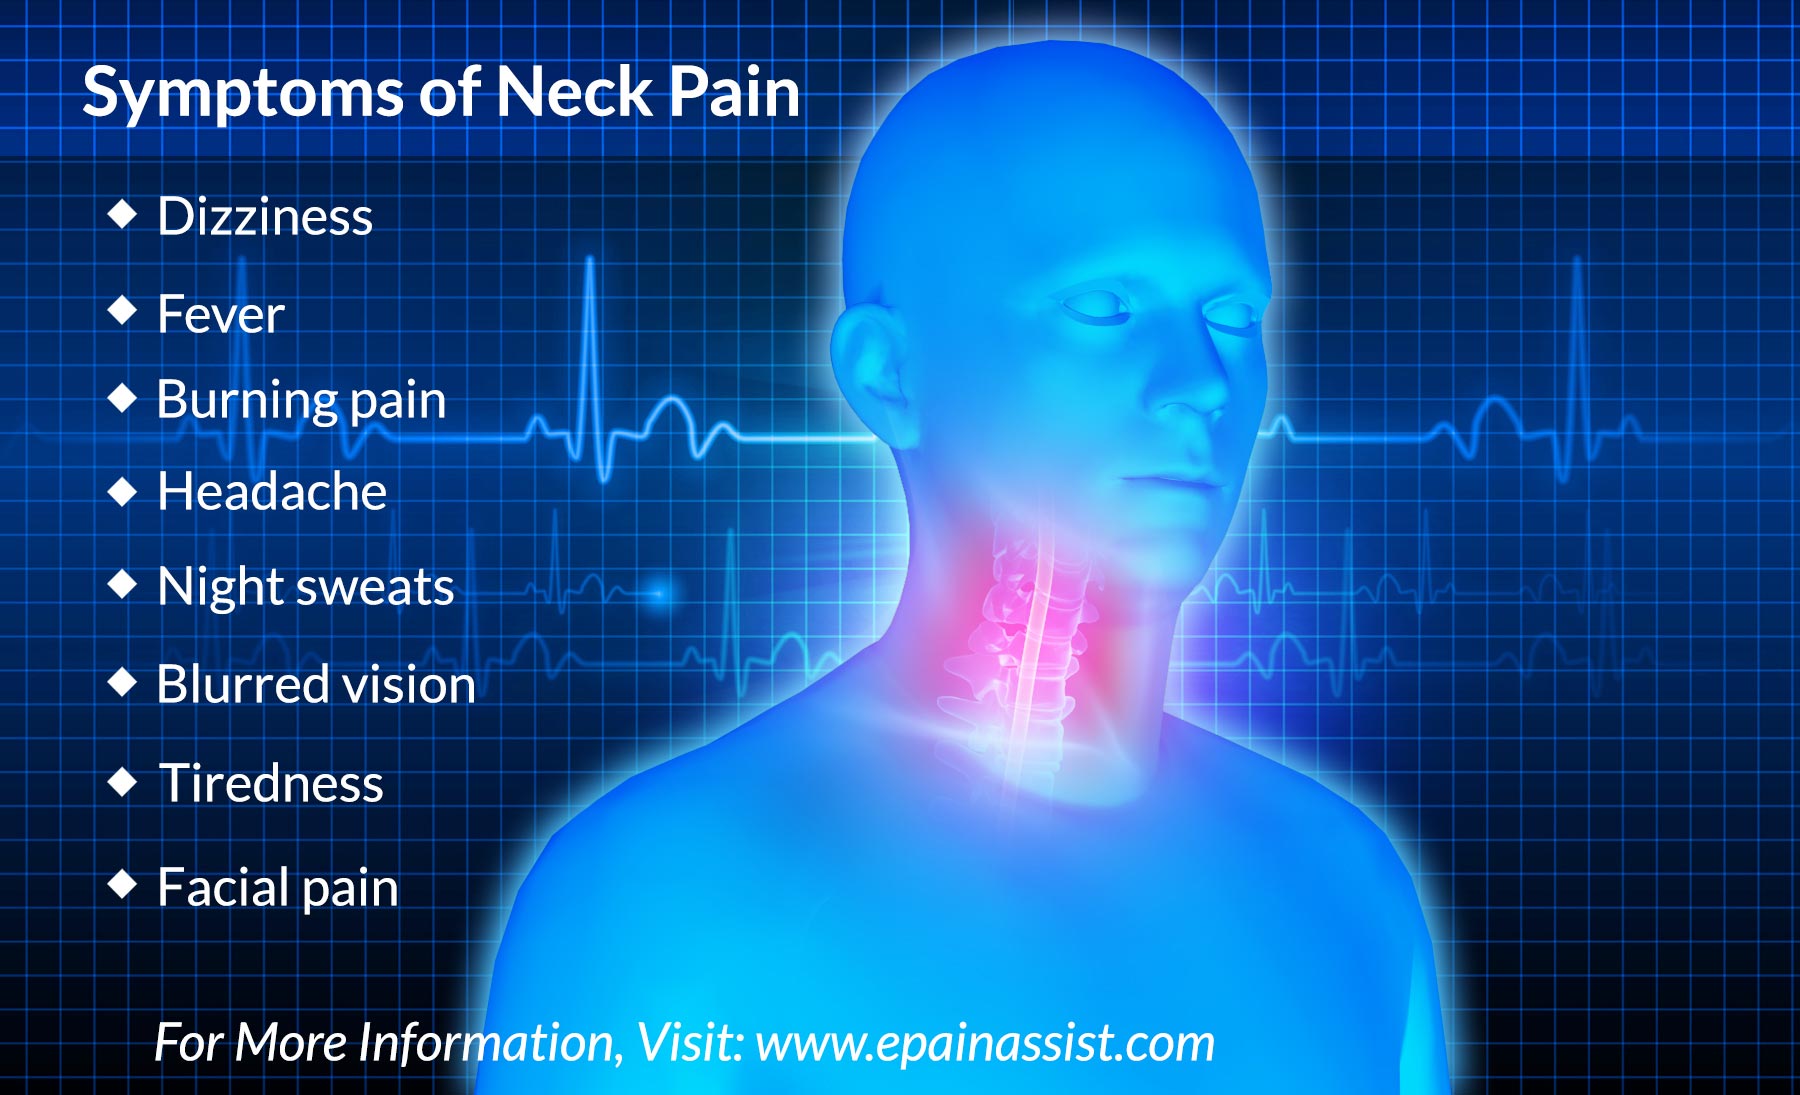 662c078a-baaf-4e99-997b-1120ae4d7671symptoms-of-neck-pain-or-cervicalgia